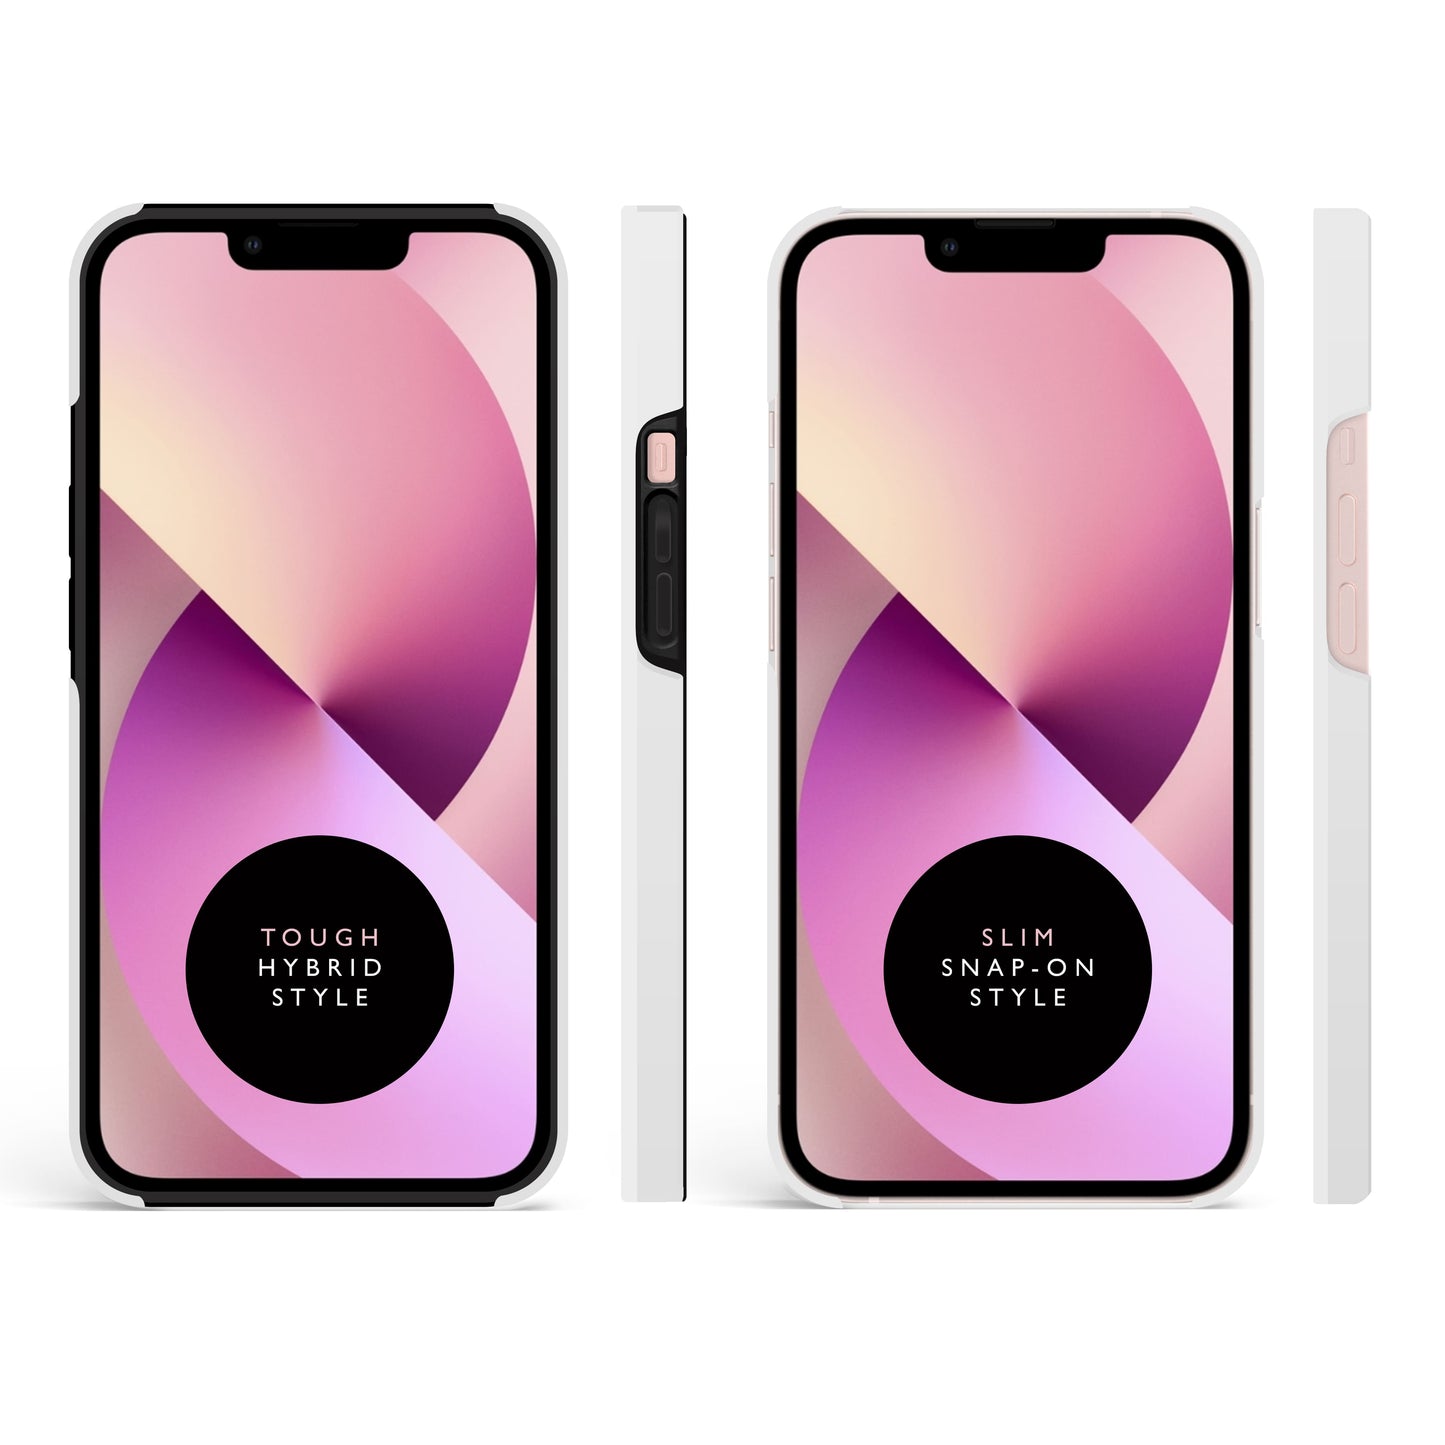 Light Blue and Pink Leopard Print Custom Phone Case  Phone Case